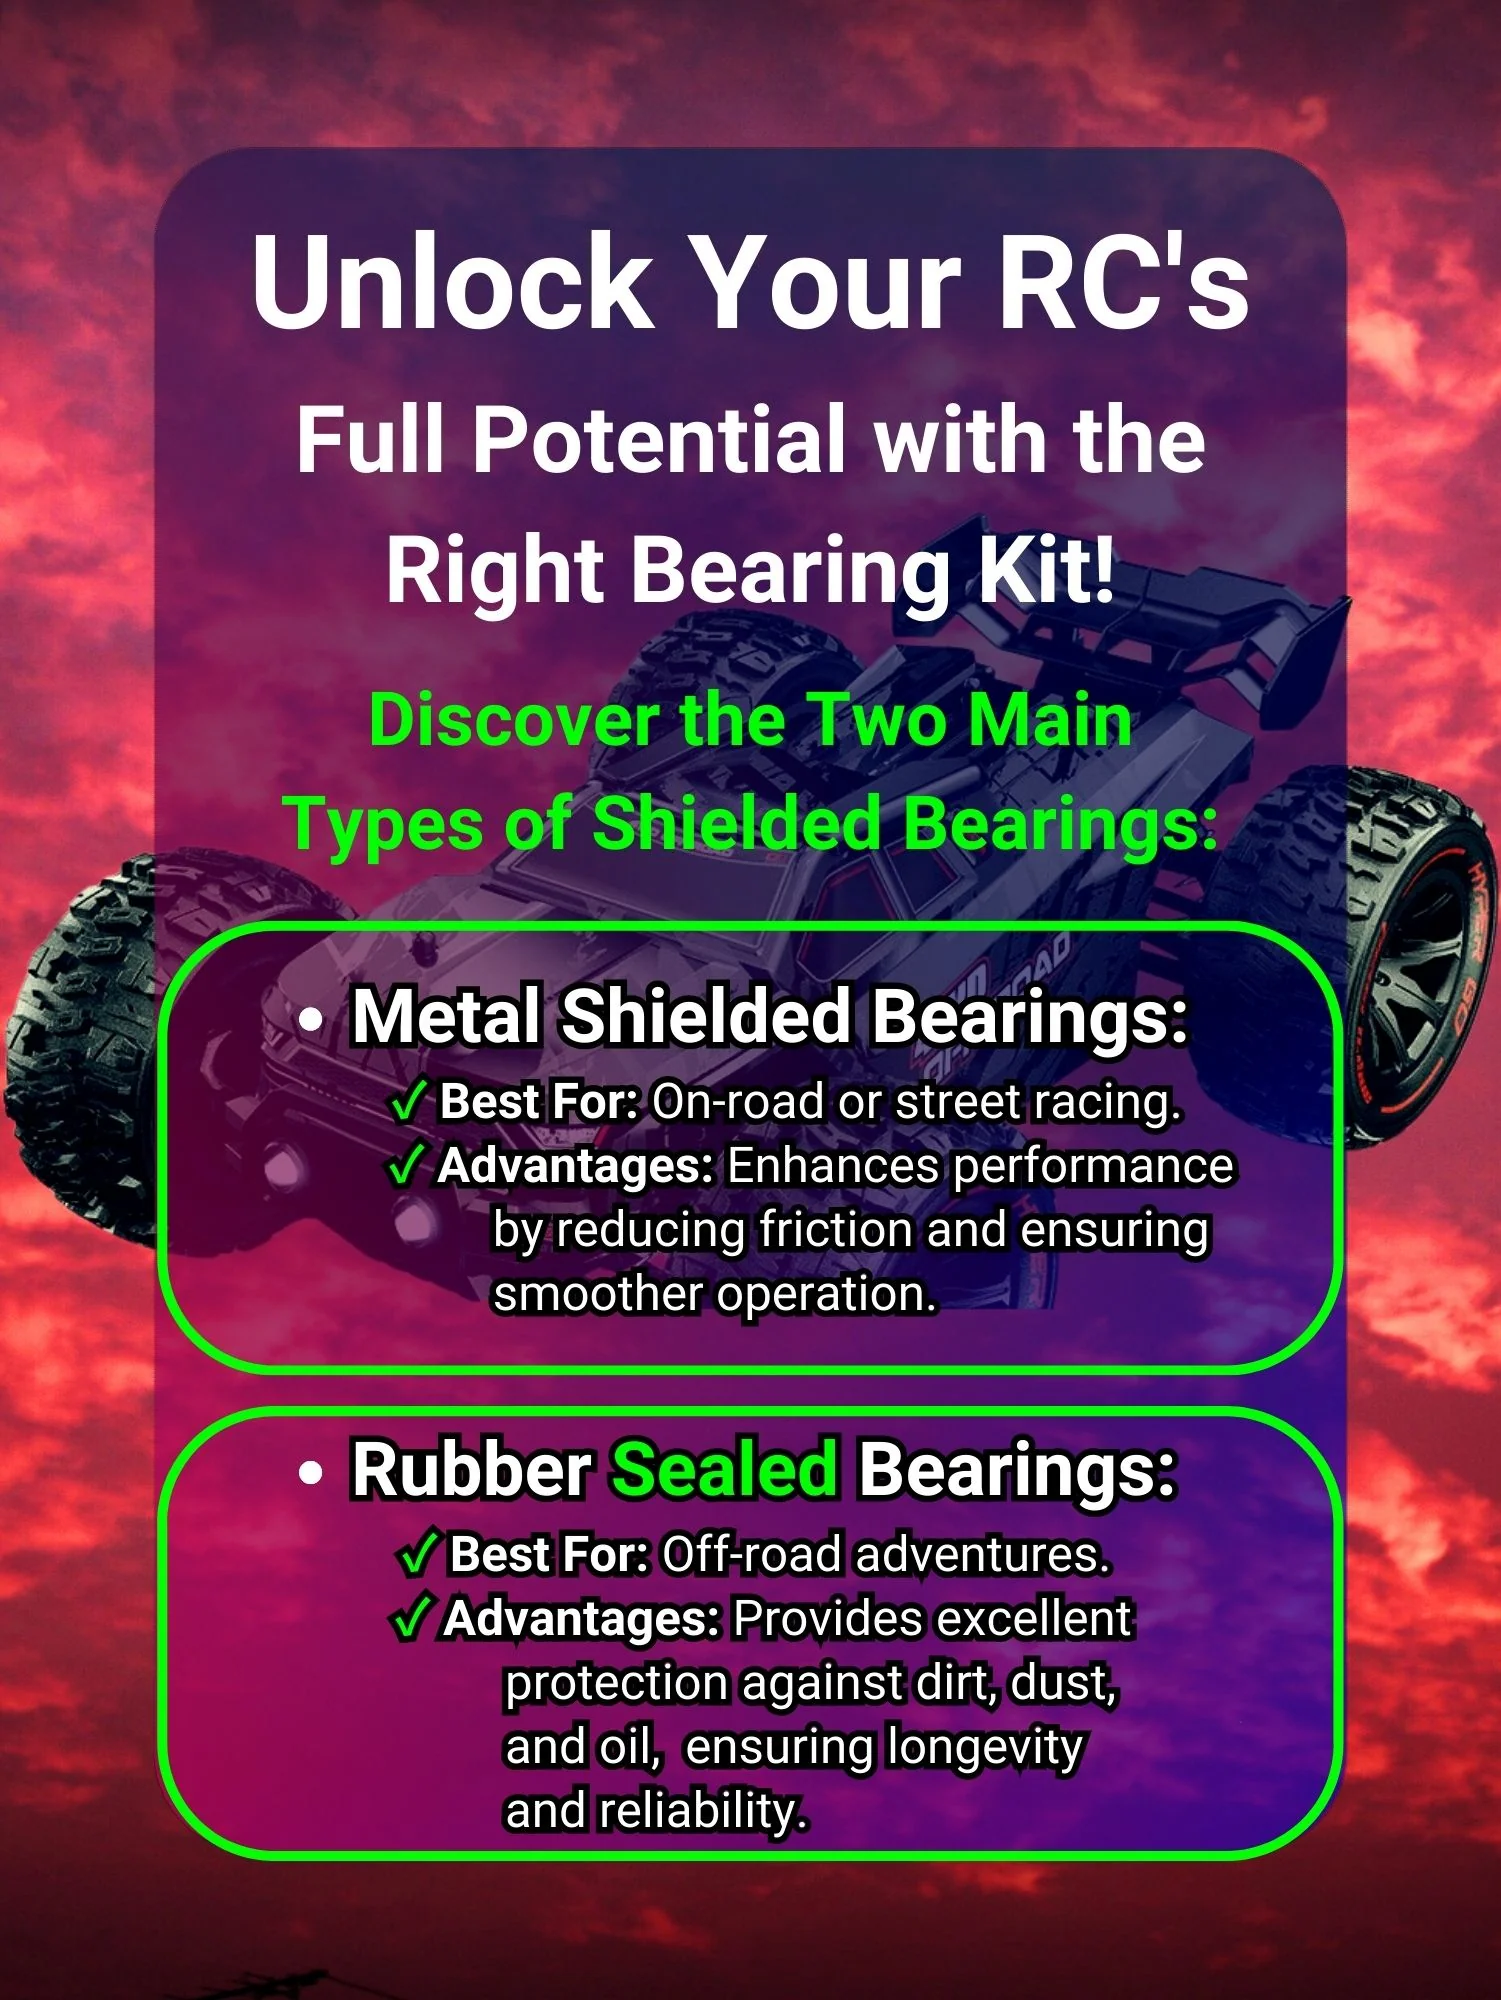 RCScrewZ Metal Shielded Bearings alg035b for Align T-REX 800 F3C RH80E05XT Heli - Picture 2 of 12